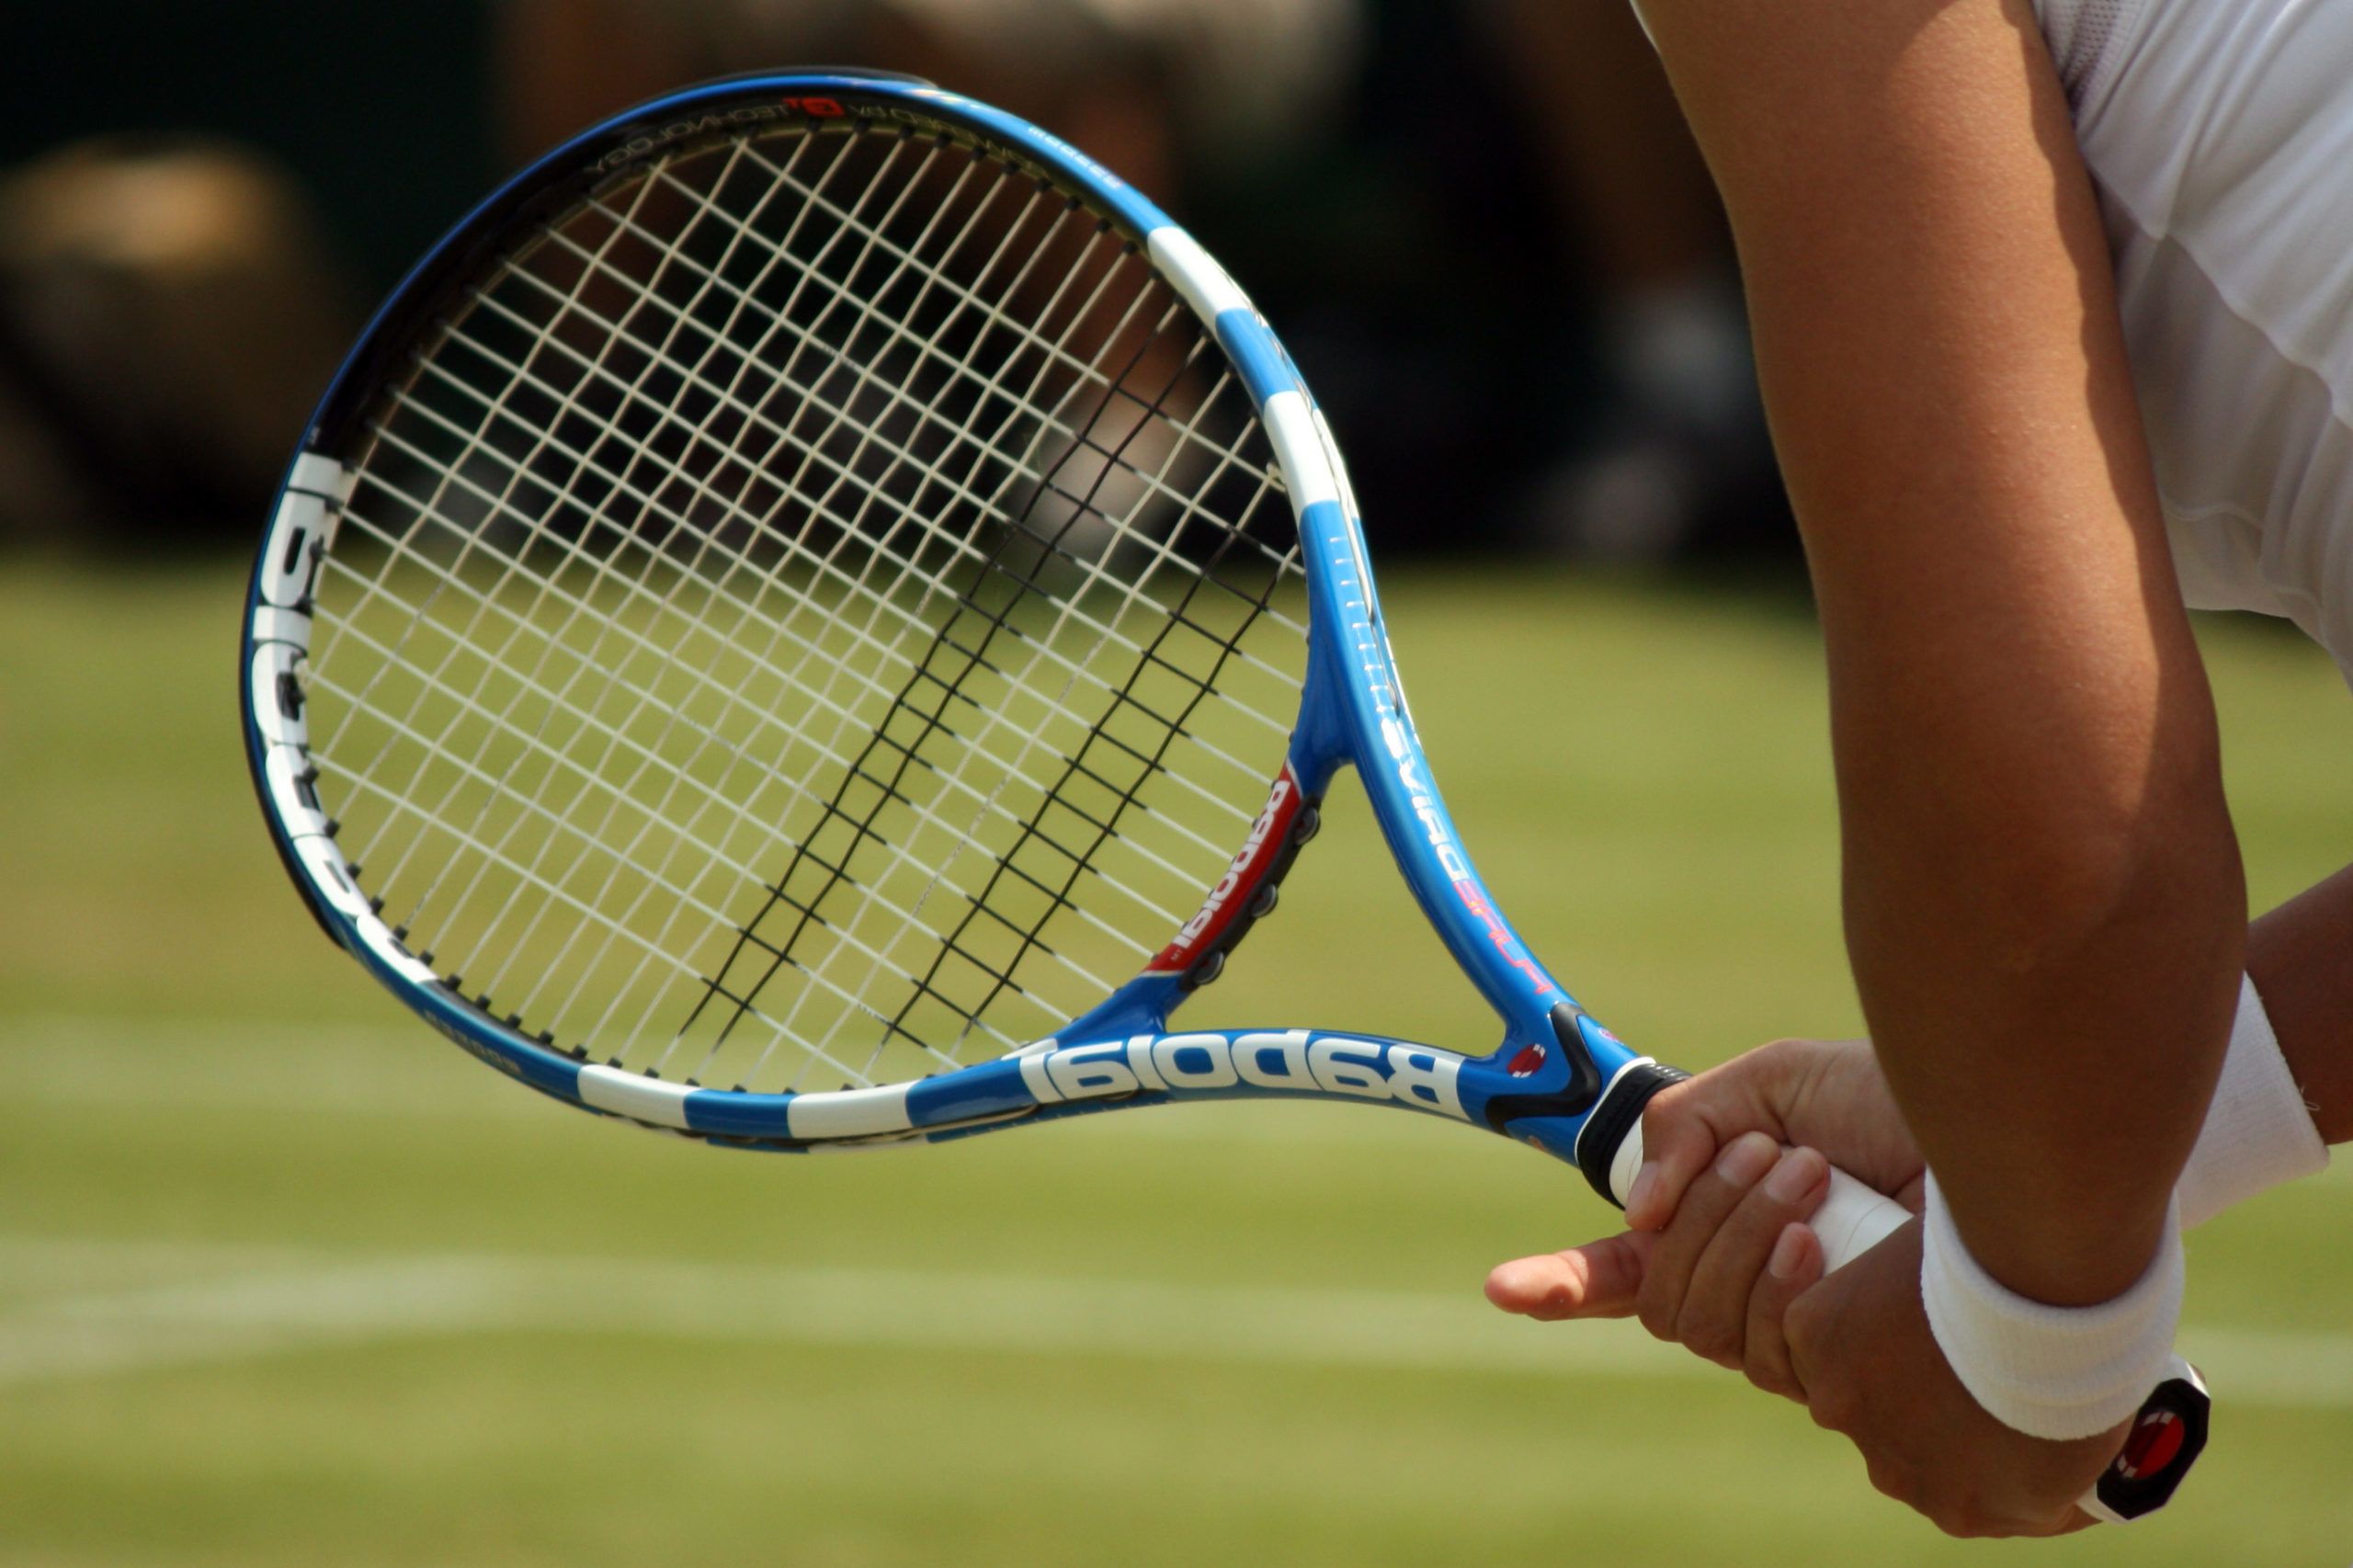 Российская теннисистка отстранена на три года за допинг